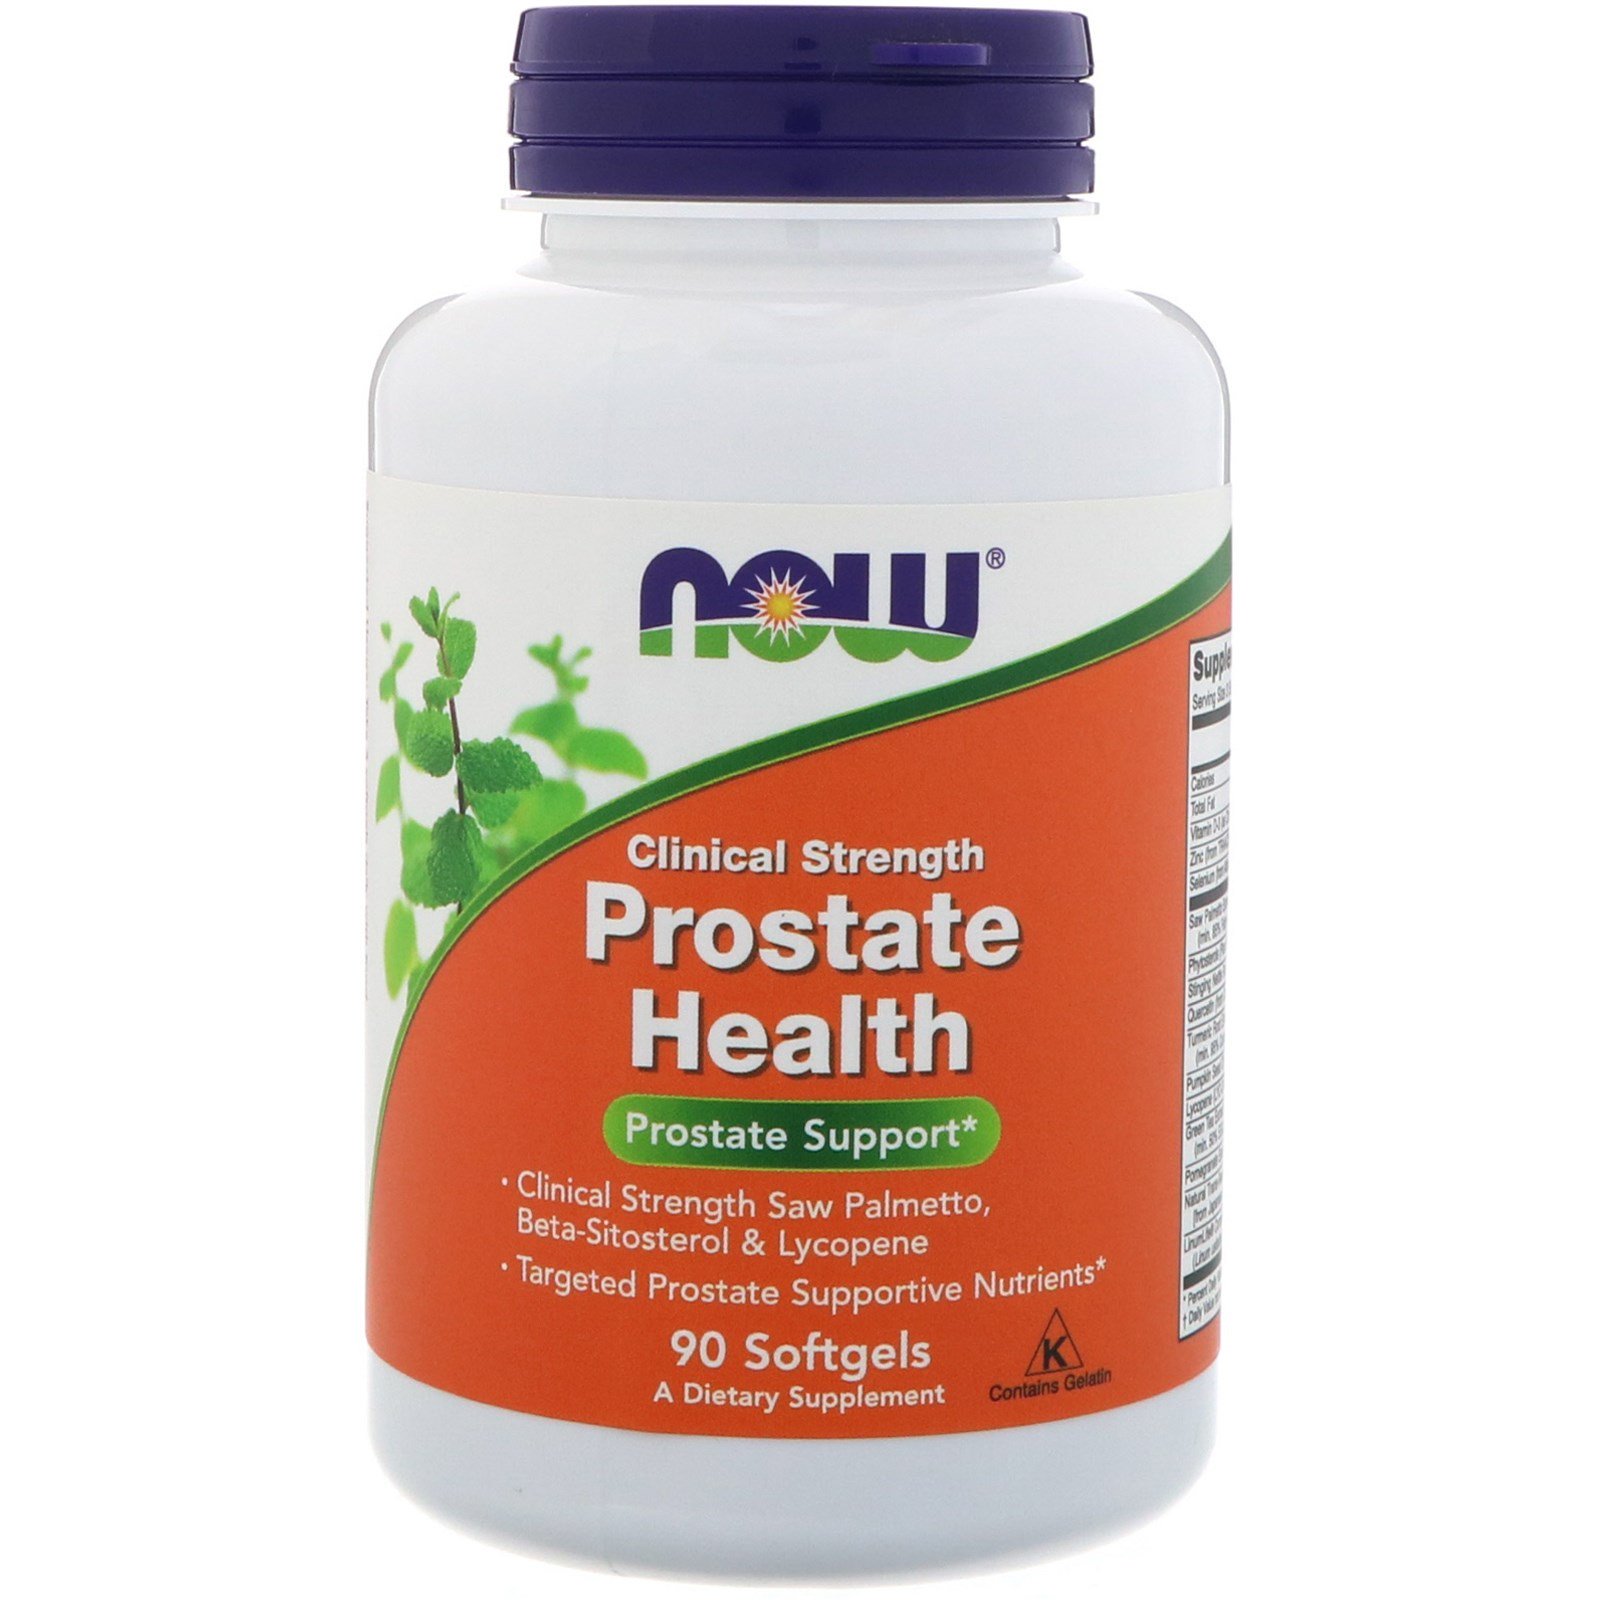 Prostate Health, Простата Хелс, Комплекс для Простаты - 90 капсул